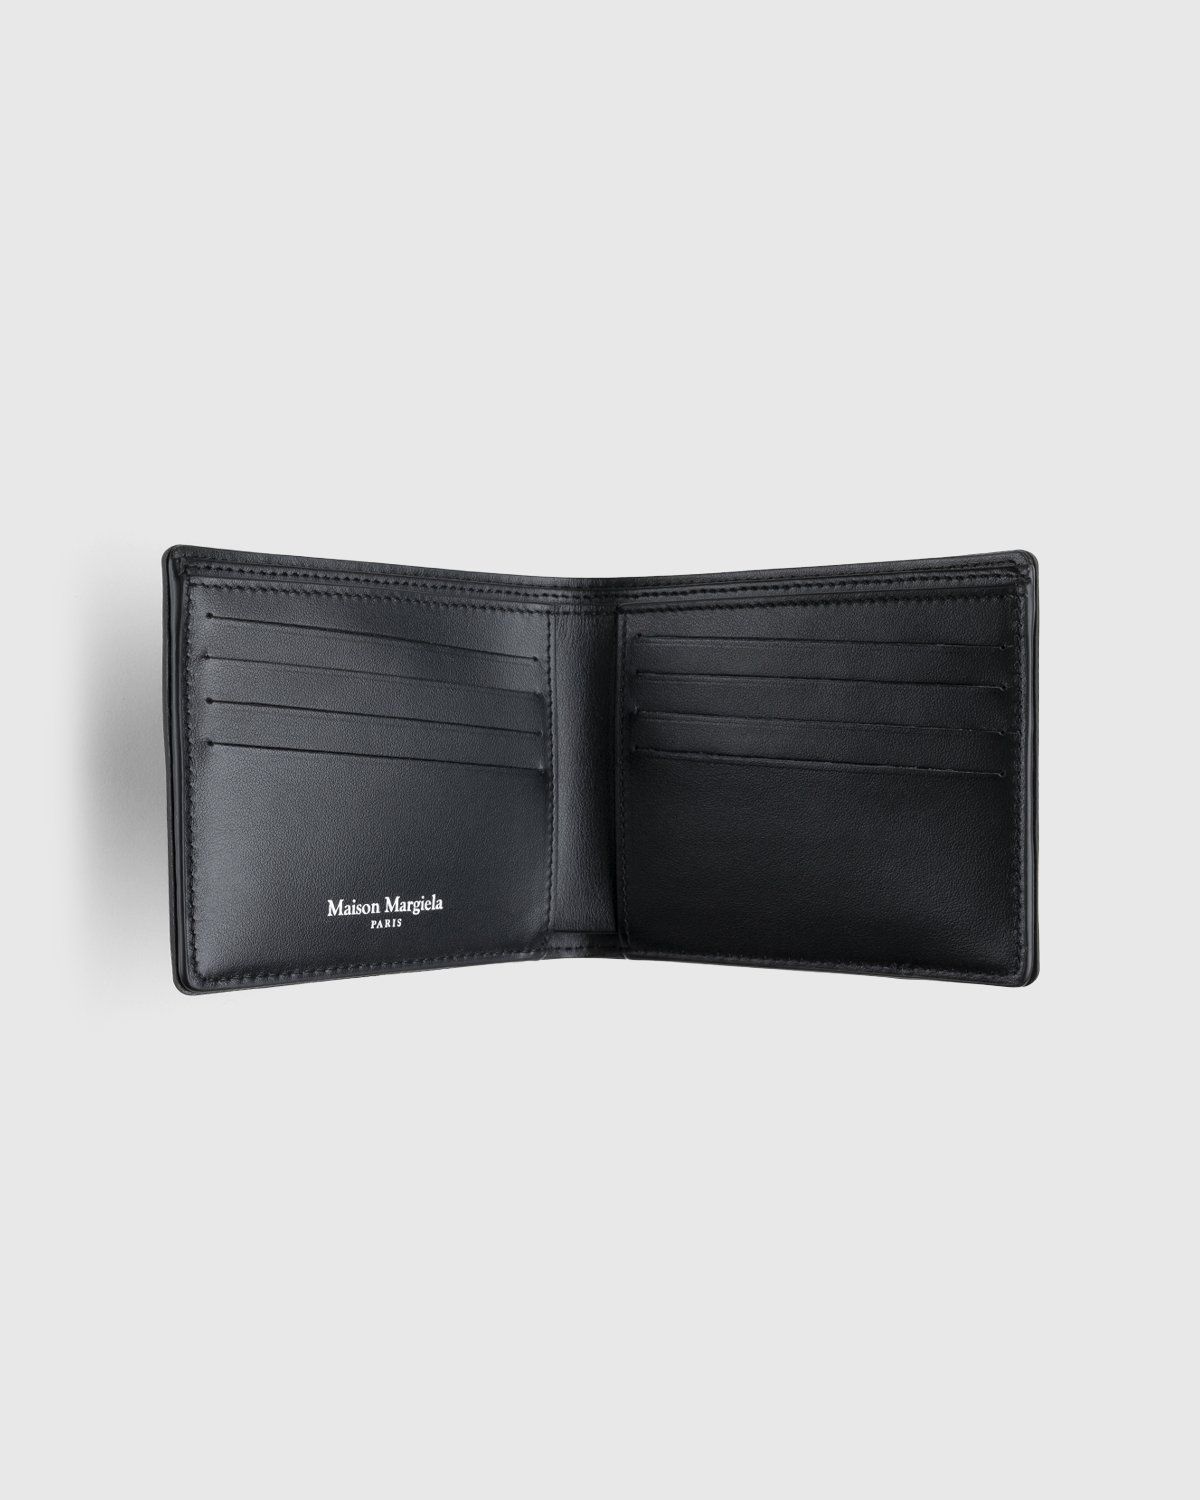 Maison Margiela – Bi-Fold Wallet Black - Wallets - Black - Image 3